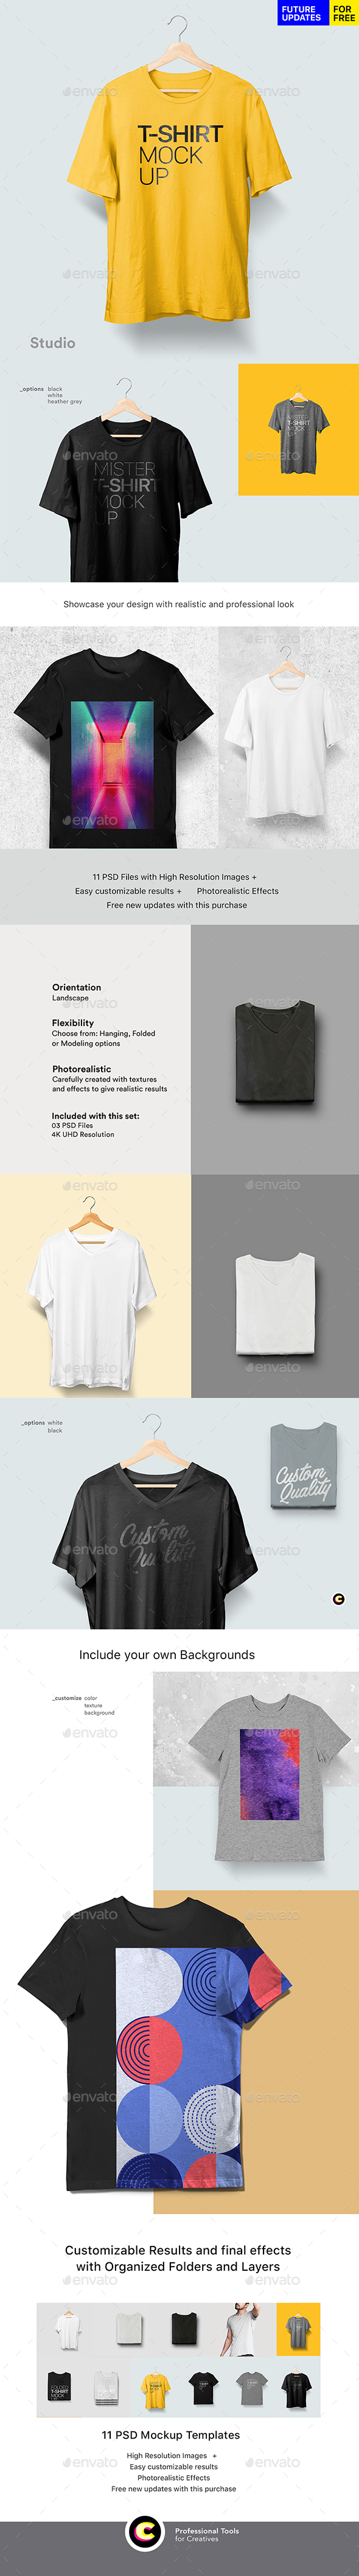 Download T Shirt Mockup Graphics Designs Templates From Graphicriver PSD Mockup Templates